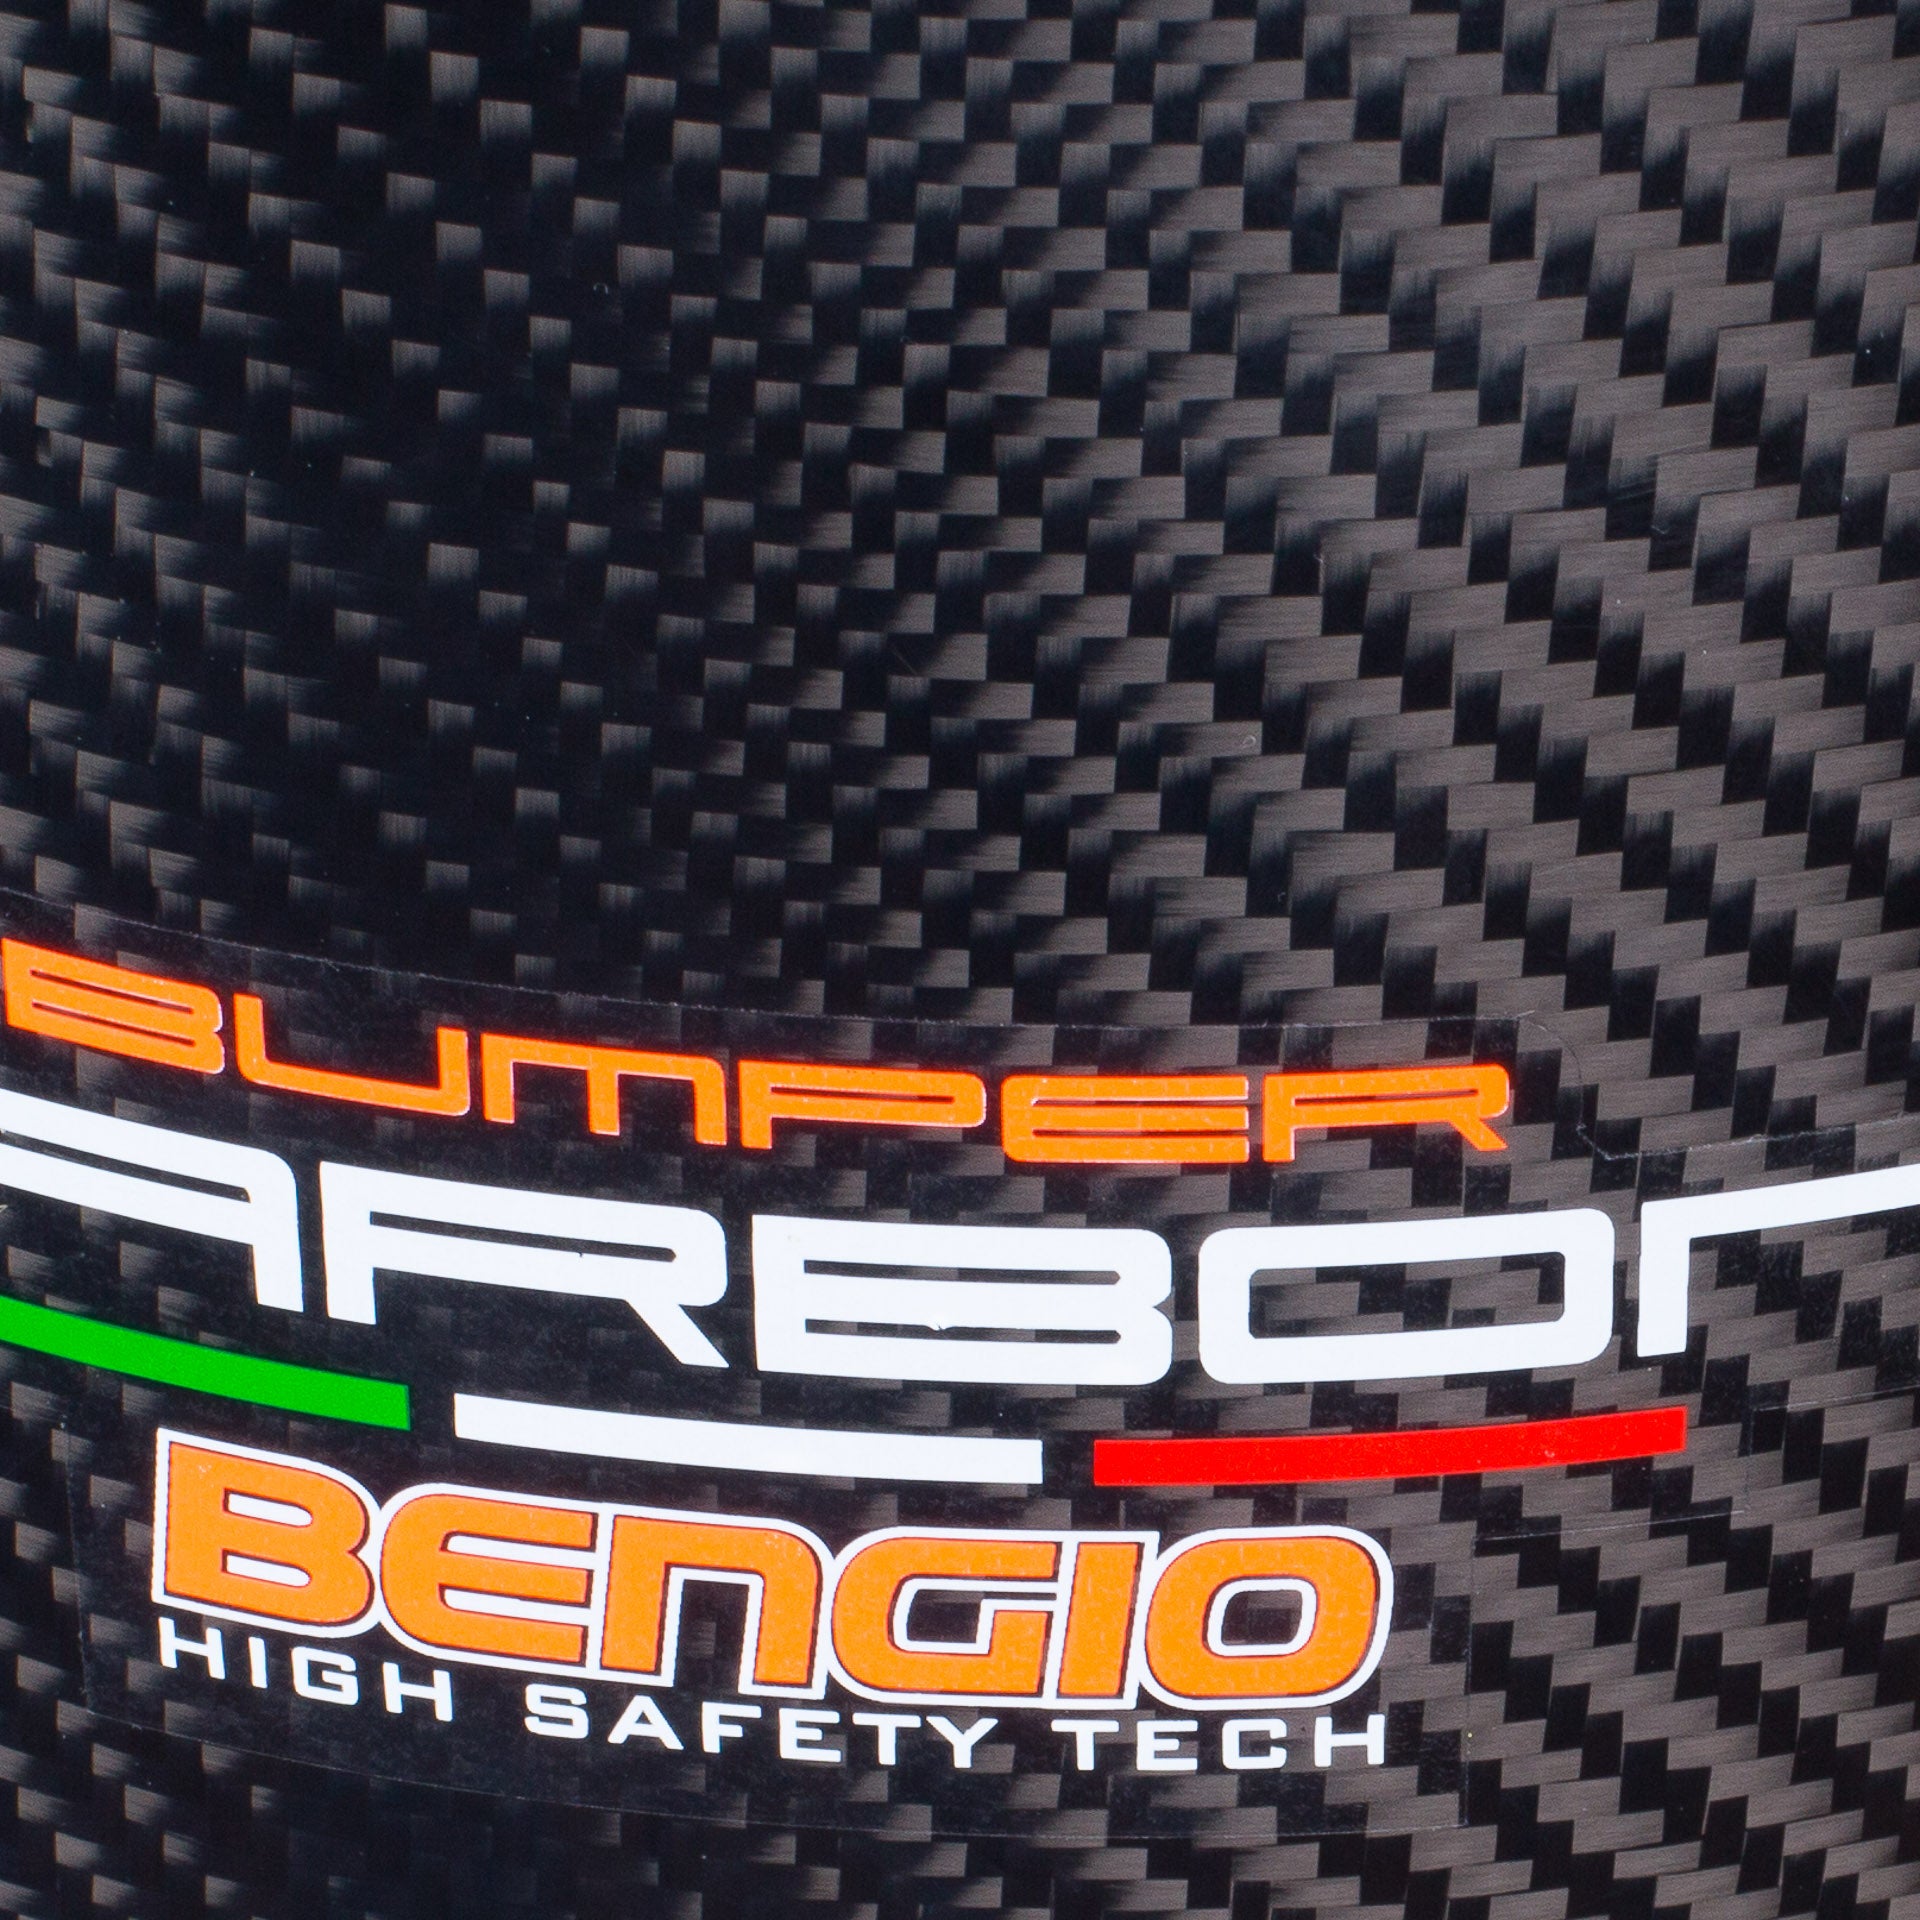 BENGIO CRBXS BUMPER Carbon Захист ребер для картингу, карбон, розмір XS Photo-6 